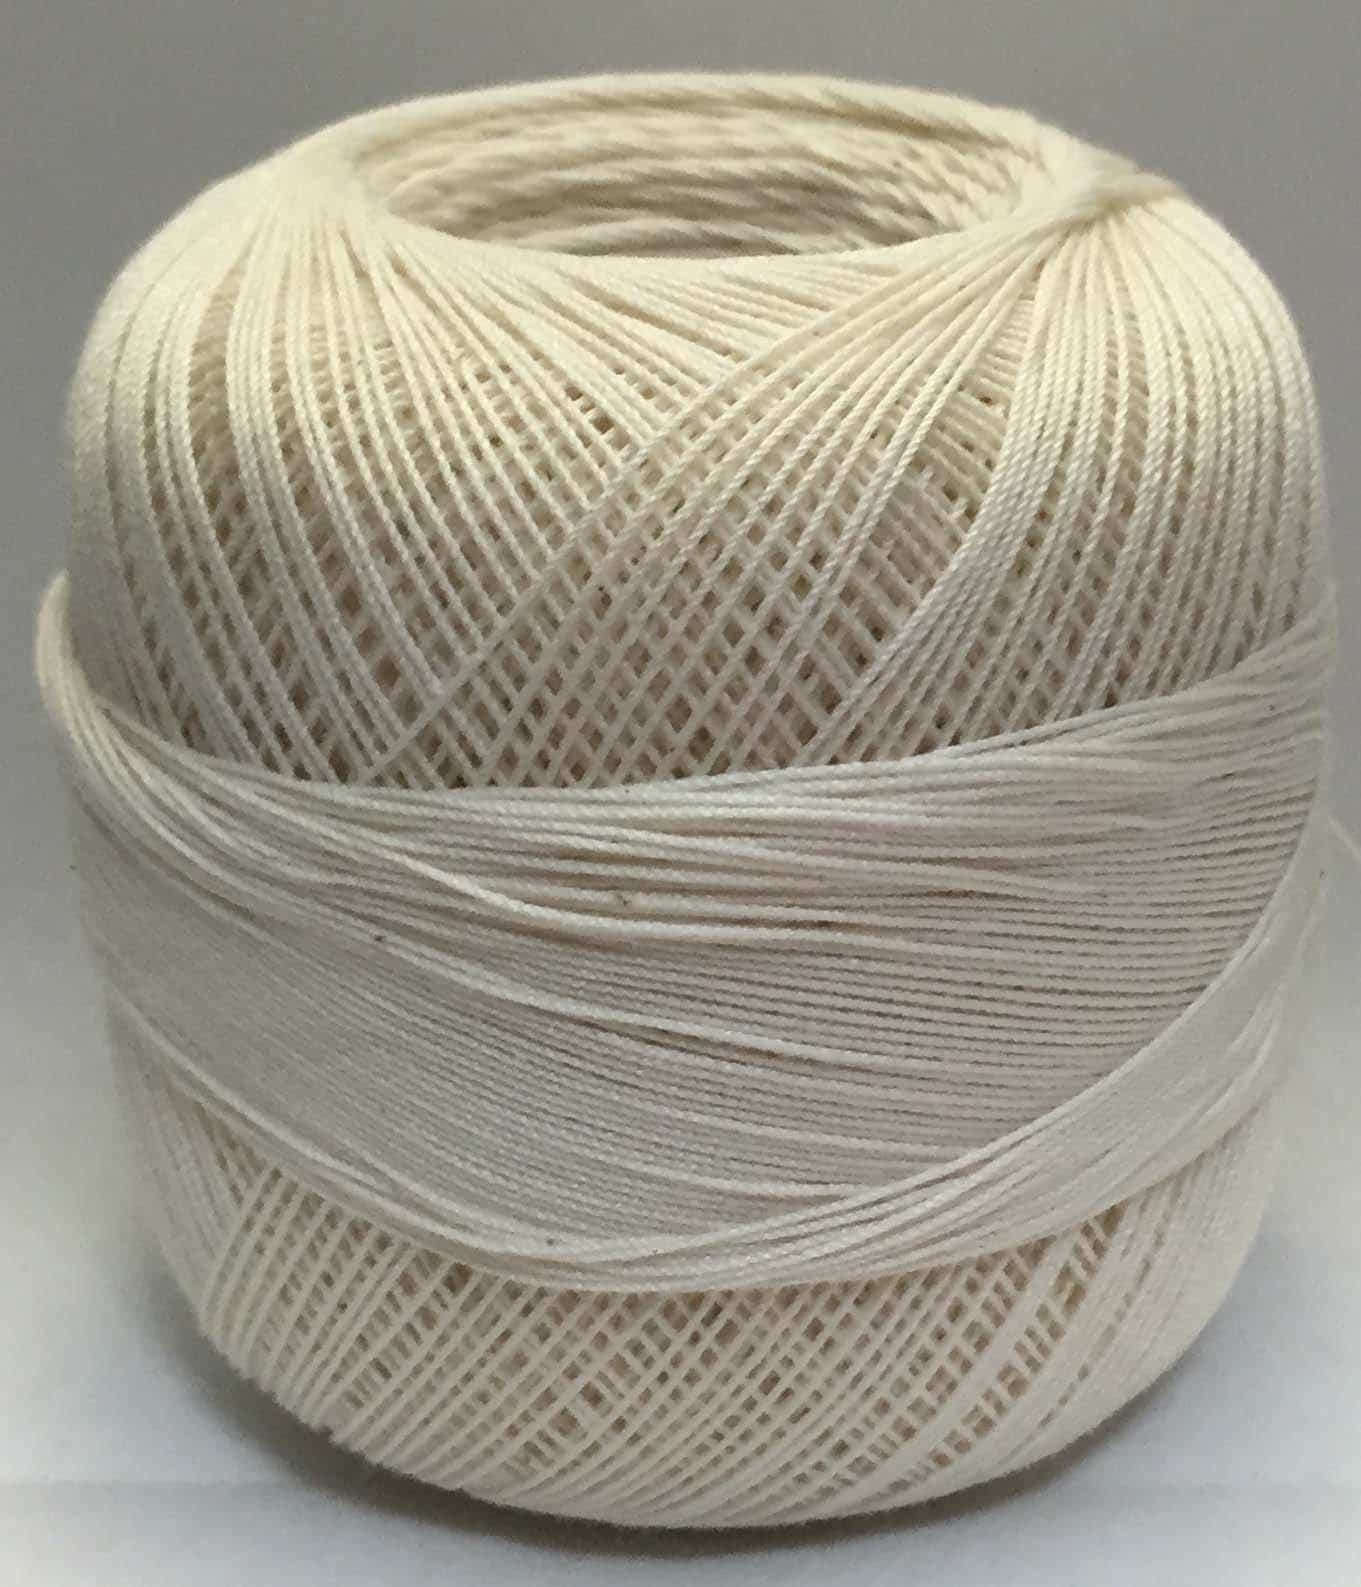 South Maid - Hilo de algodón para ganchillo, talla 10, color crema